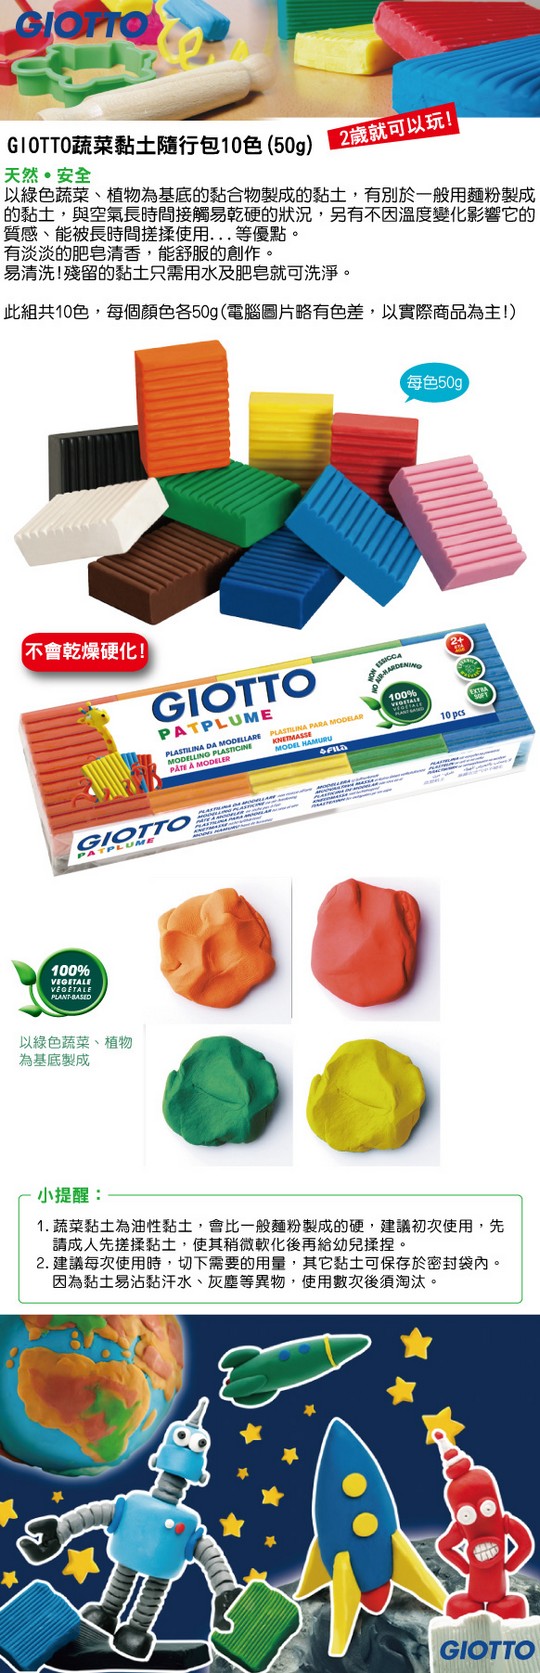 【義大利 GIOTTO】蔬菜黏土隨行包10色(50G)